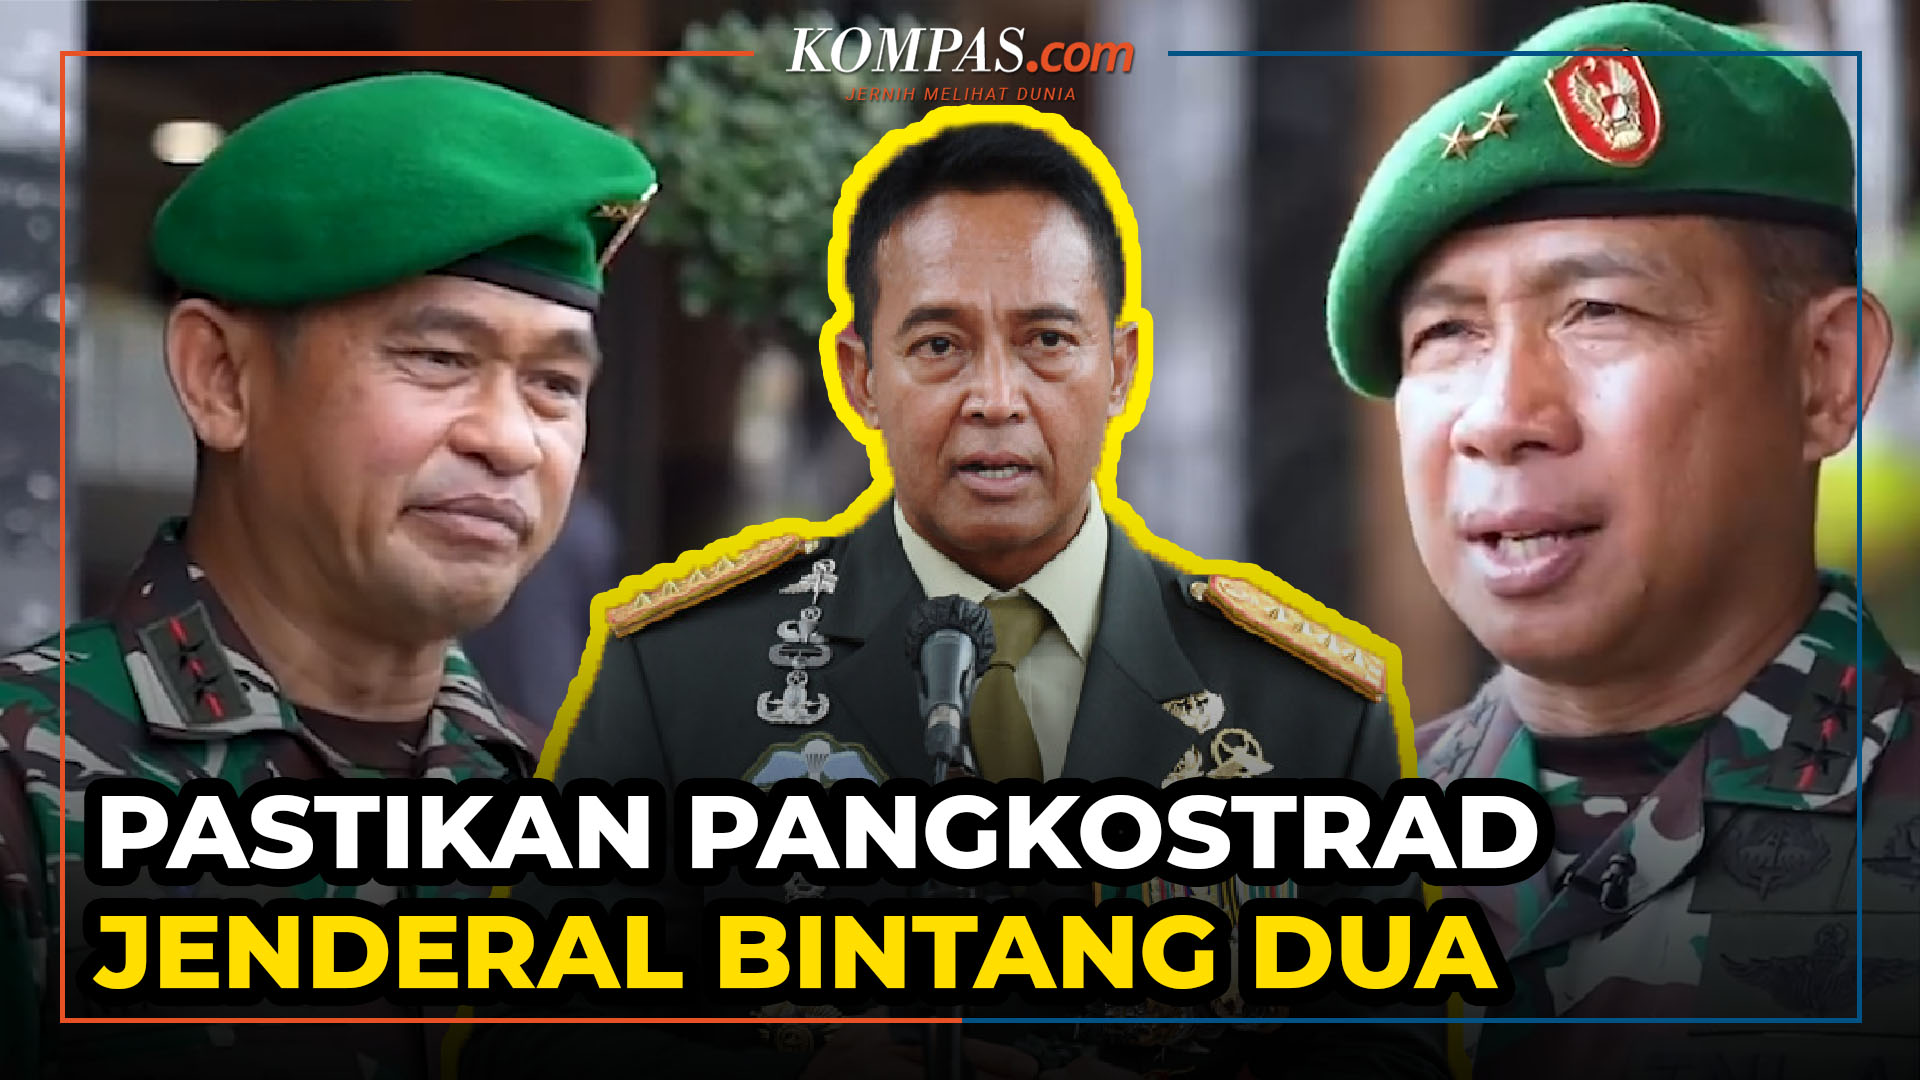 Panglima TNI Pastikan Pengisi Pangkostrad Baru Jenderal TNI Bintang Dua